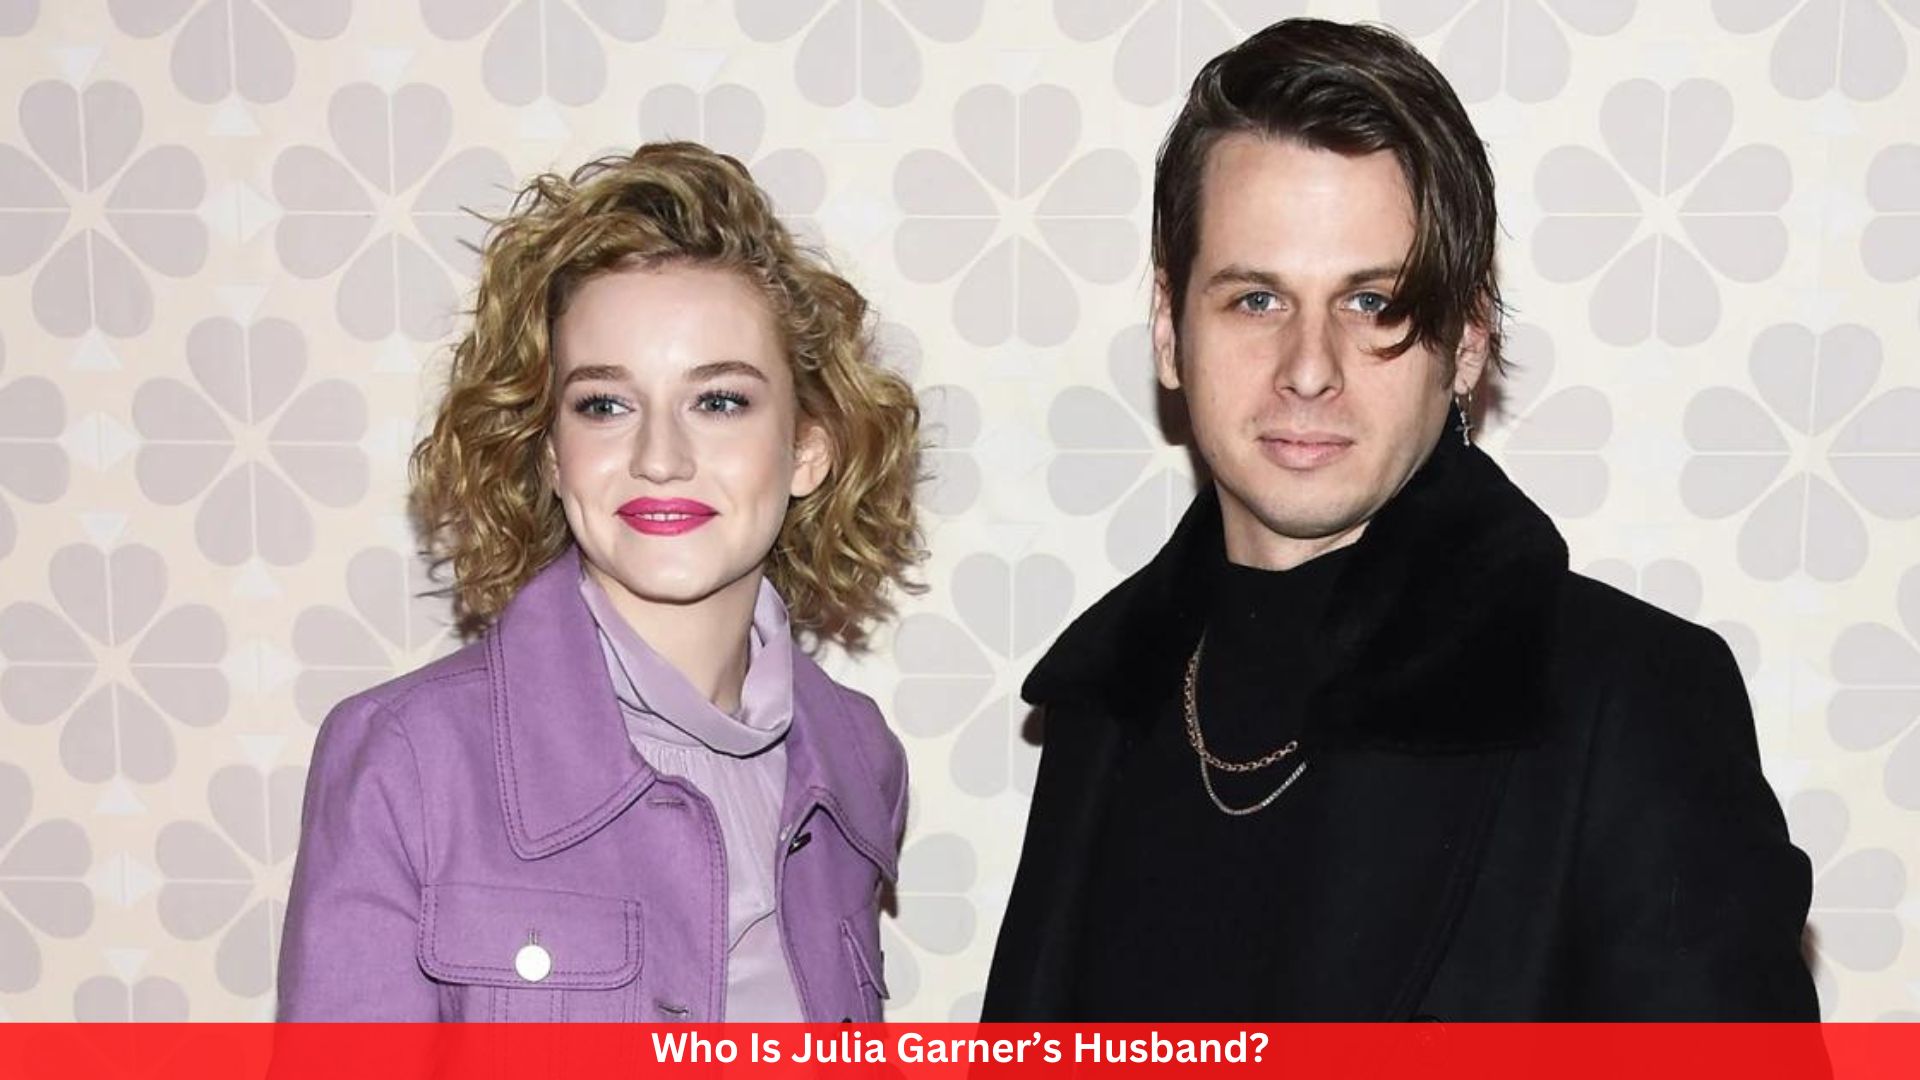 Who Is Julia Garner’s Husband?